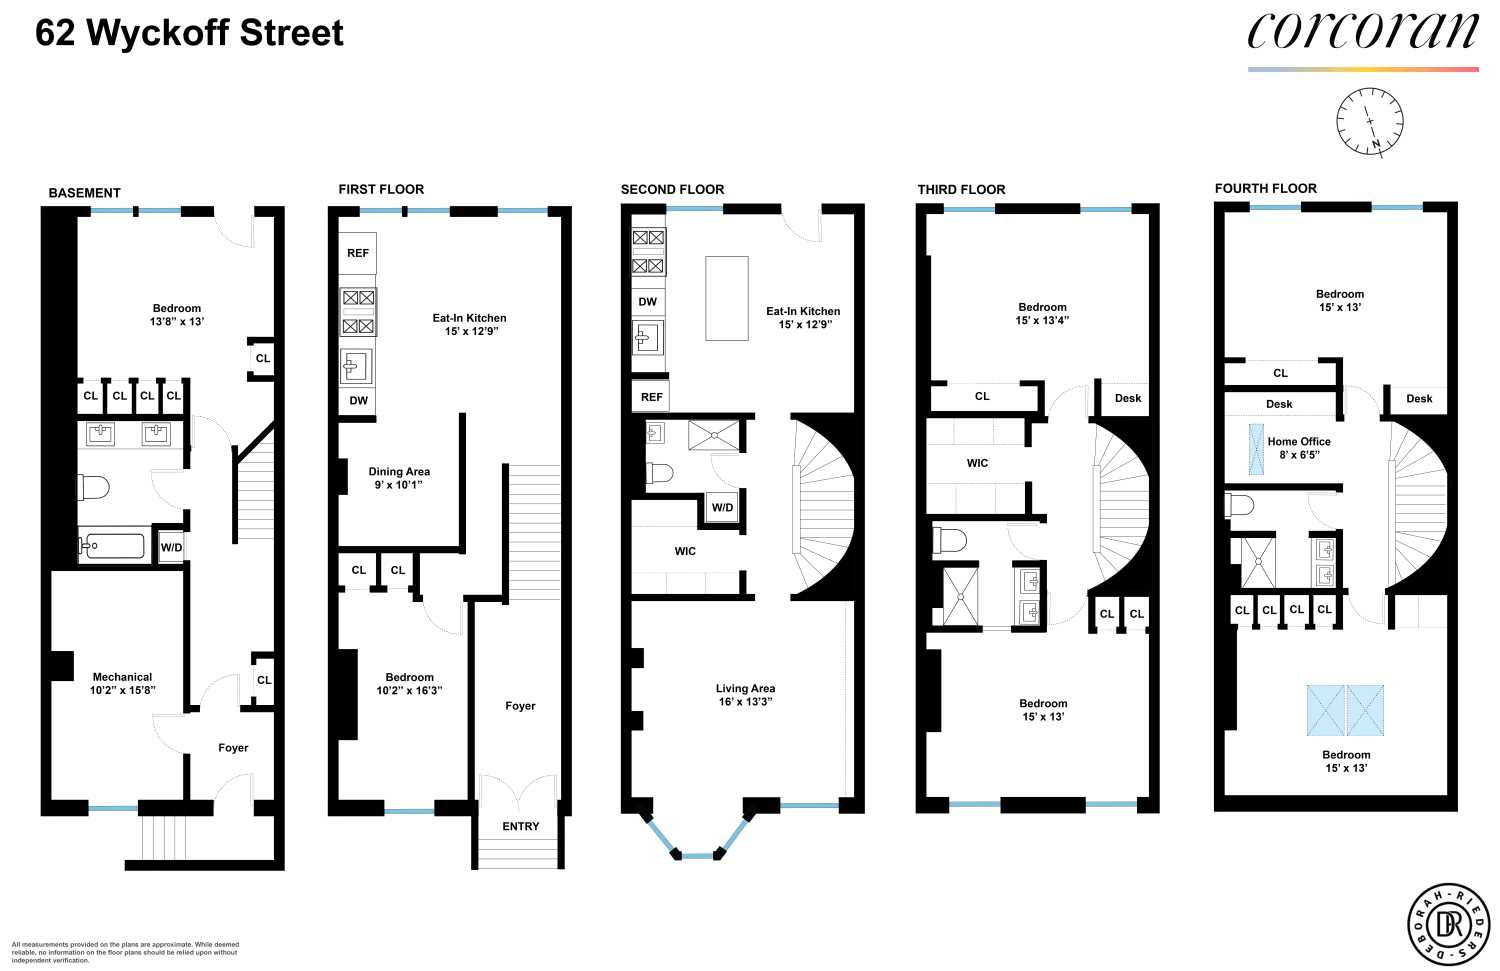 Floorplan for 62 Wyckoff Street